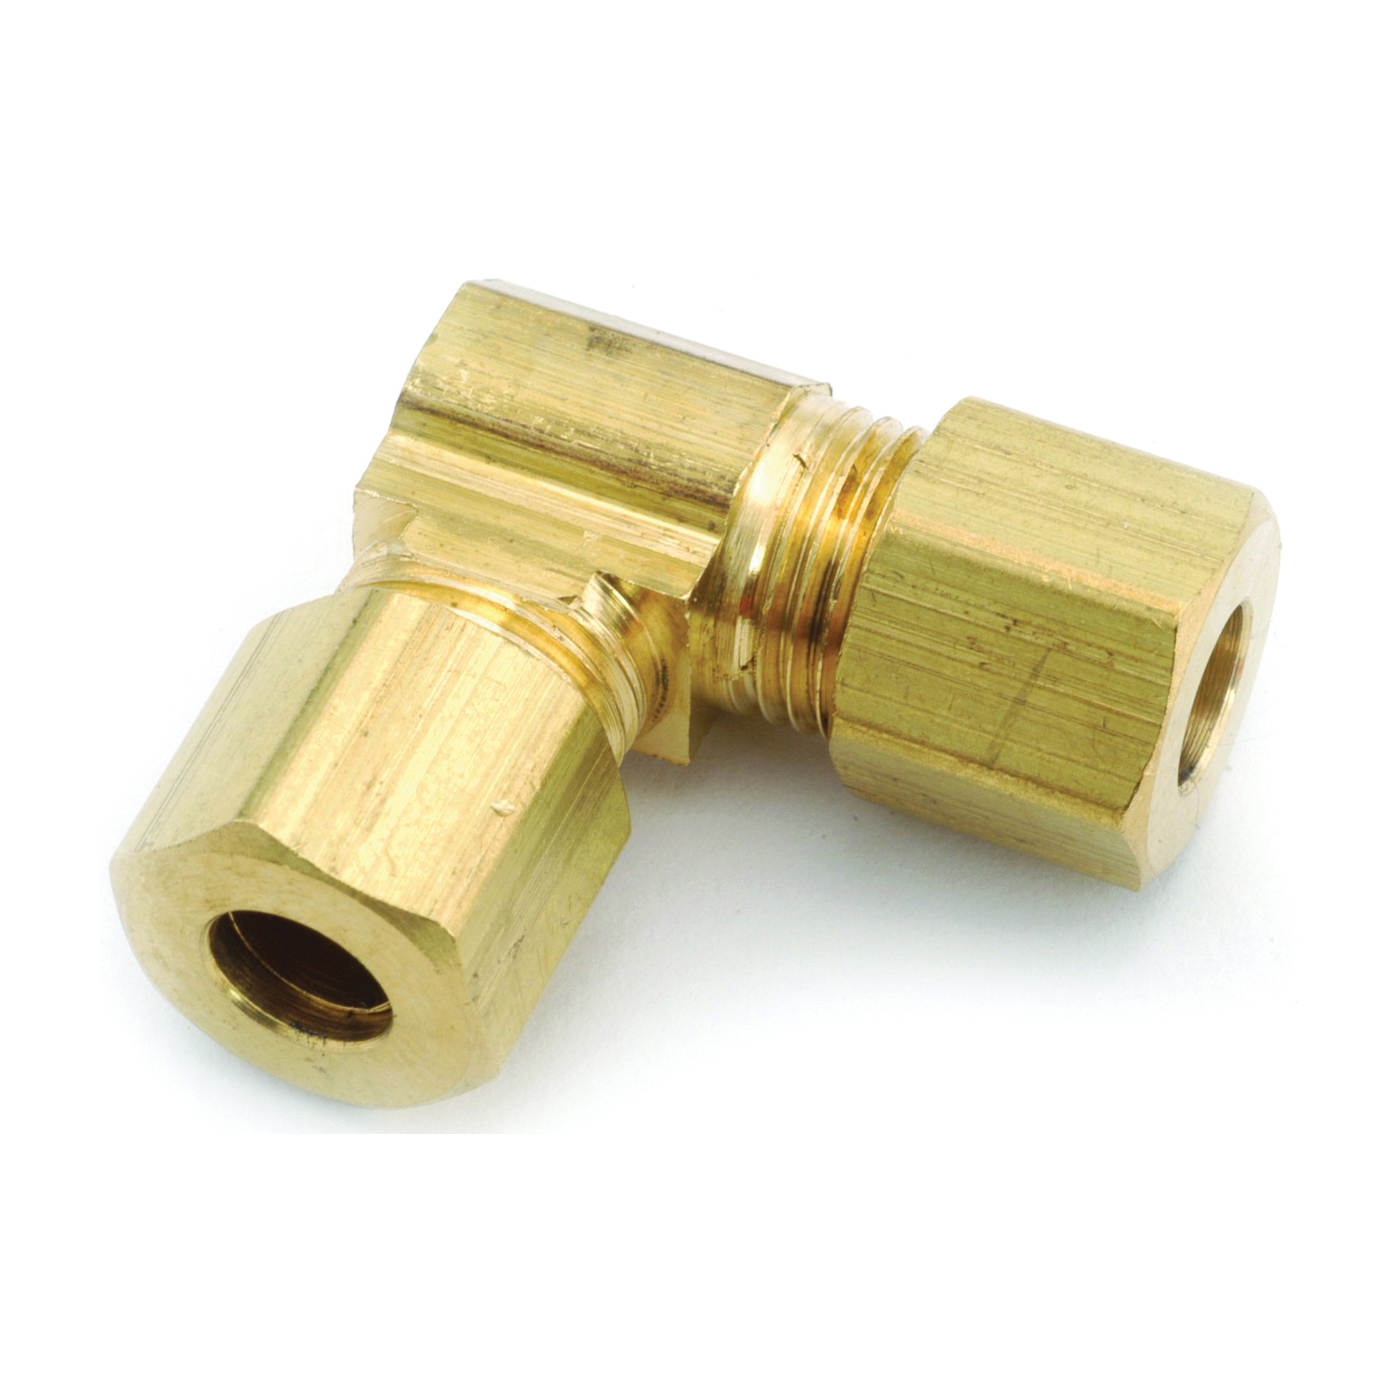 Anderson Metals 750065-10 Tube Union Elbow, 5/8 in, 90 deg Angle, Brass, 150 psi Pressure - 1